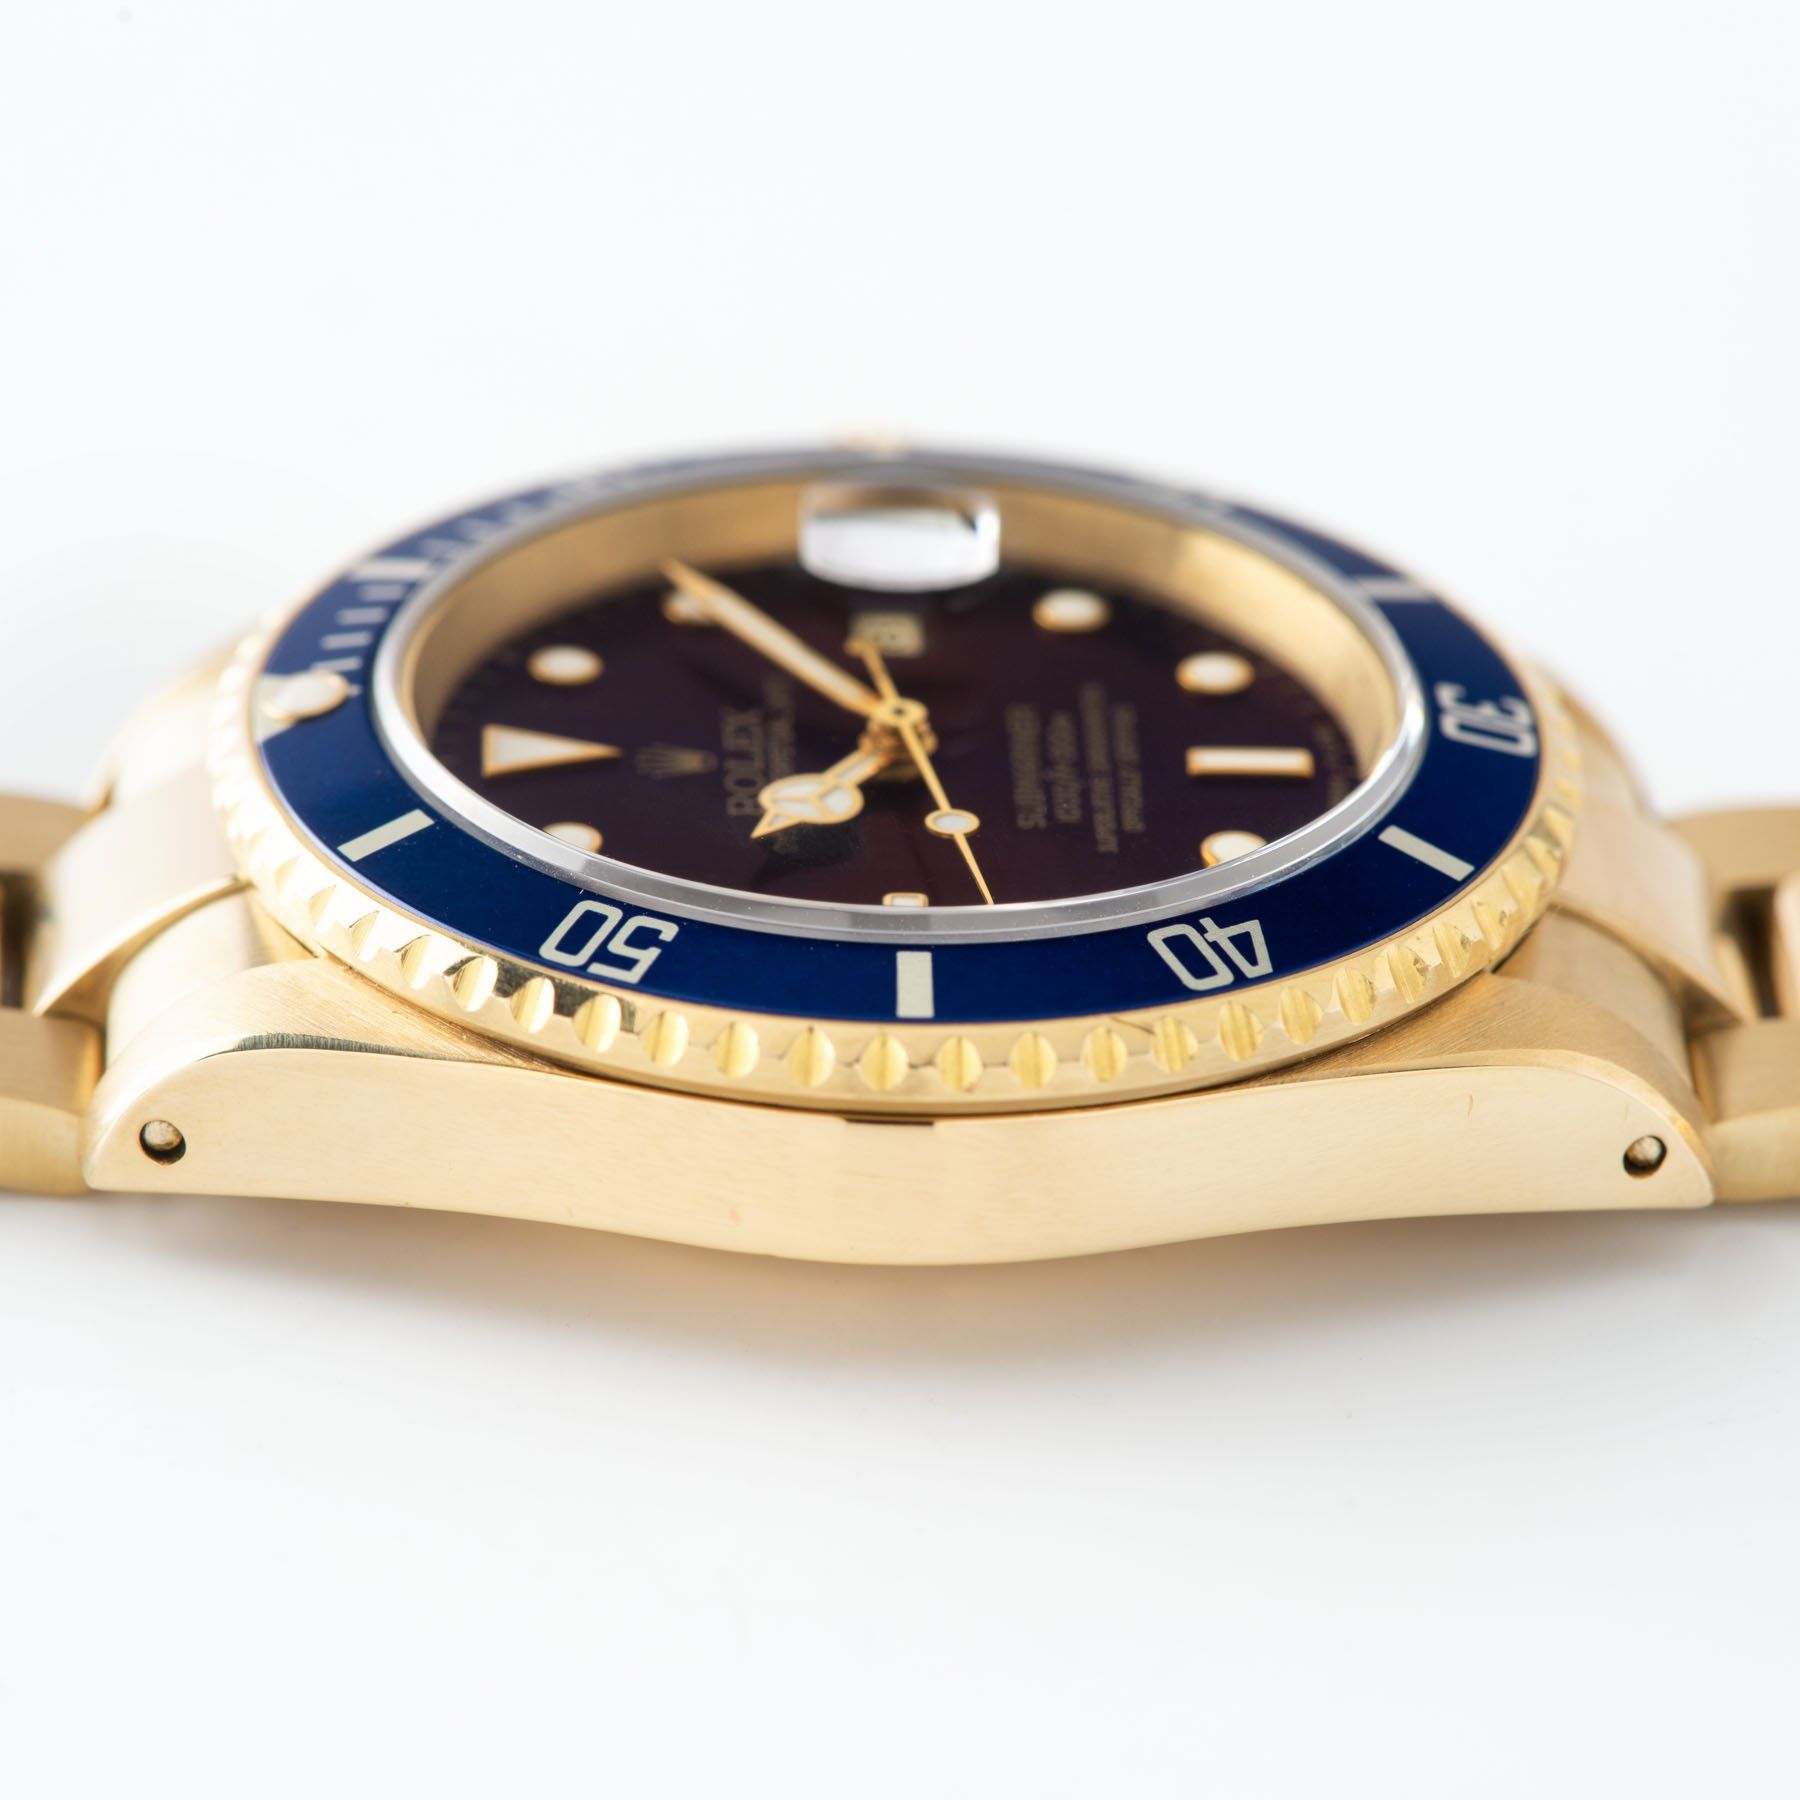 Rolex Submariner Date Purple Dial Yellow Gold 16618case details